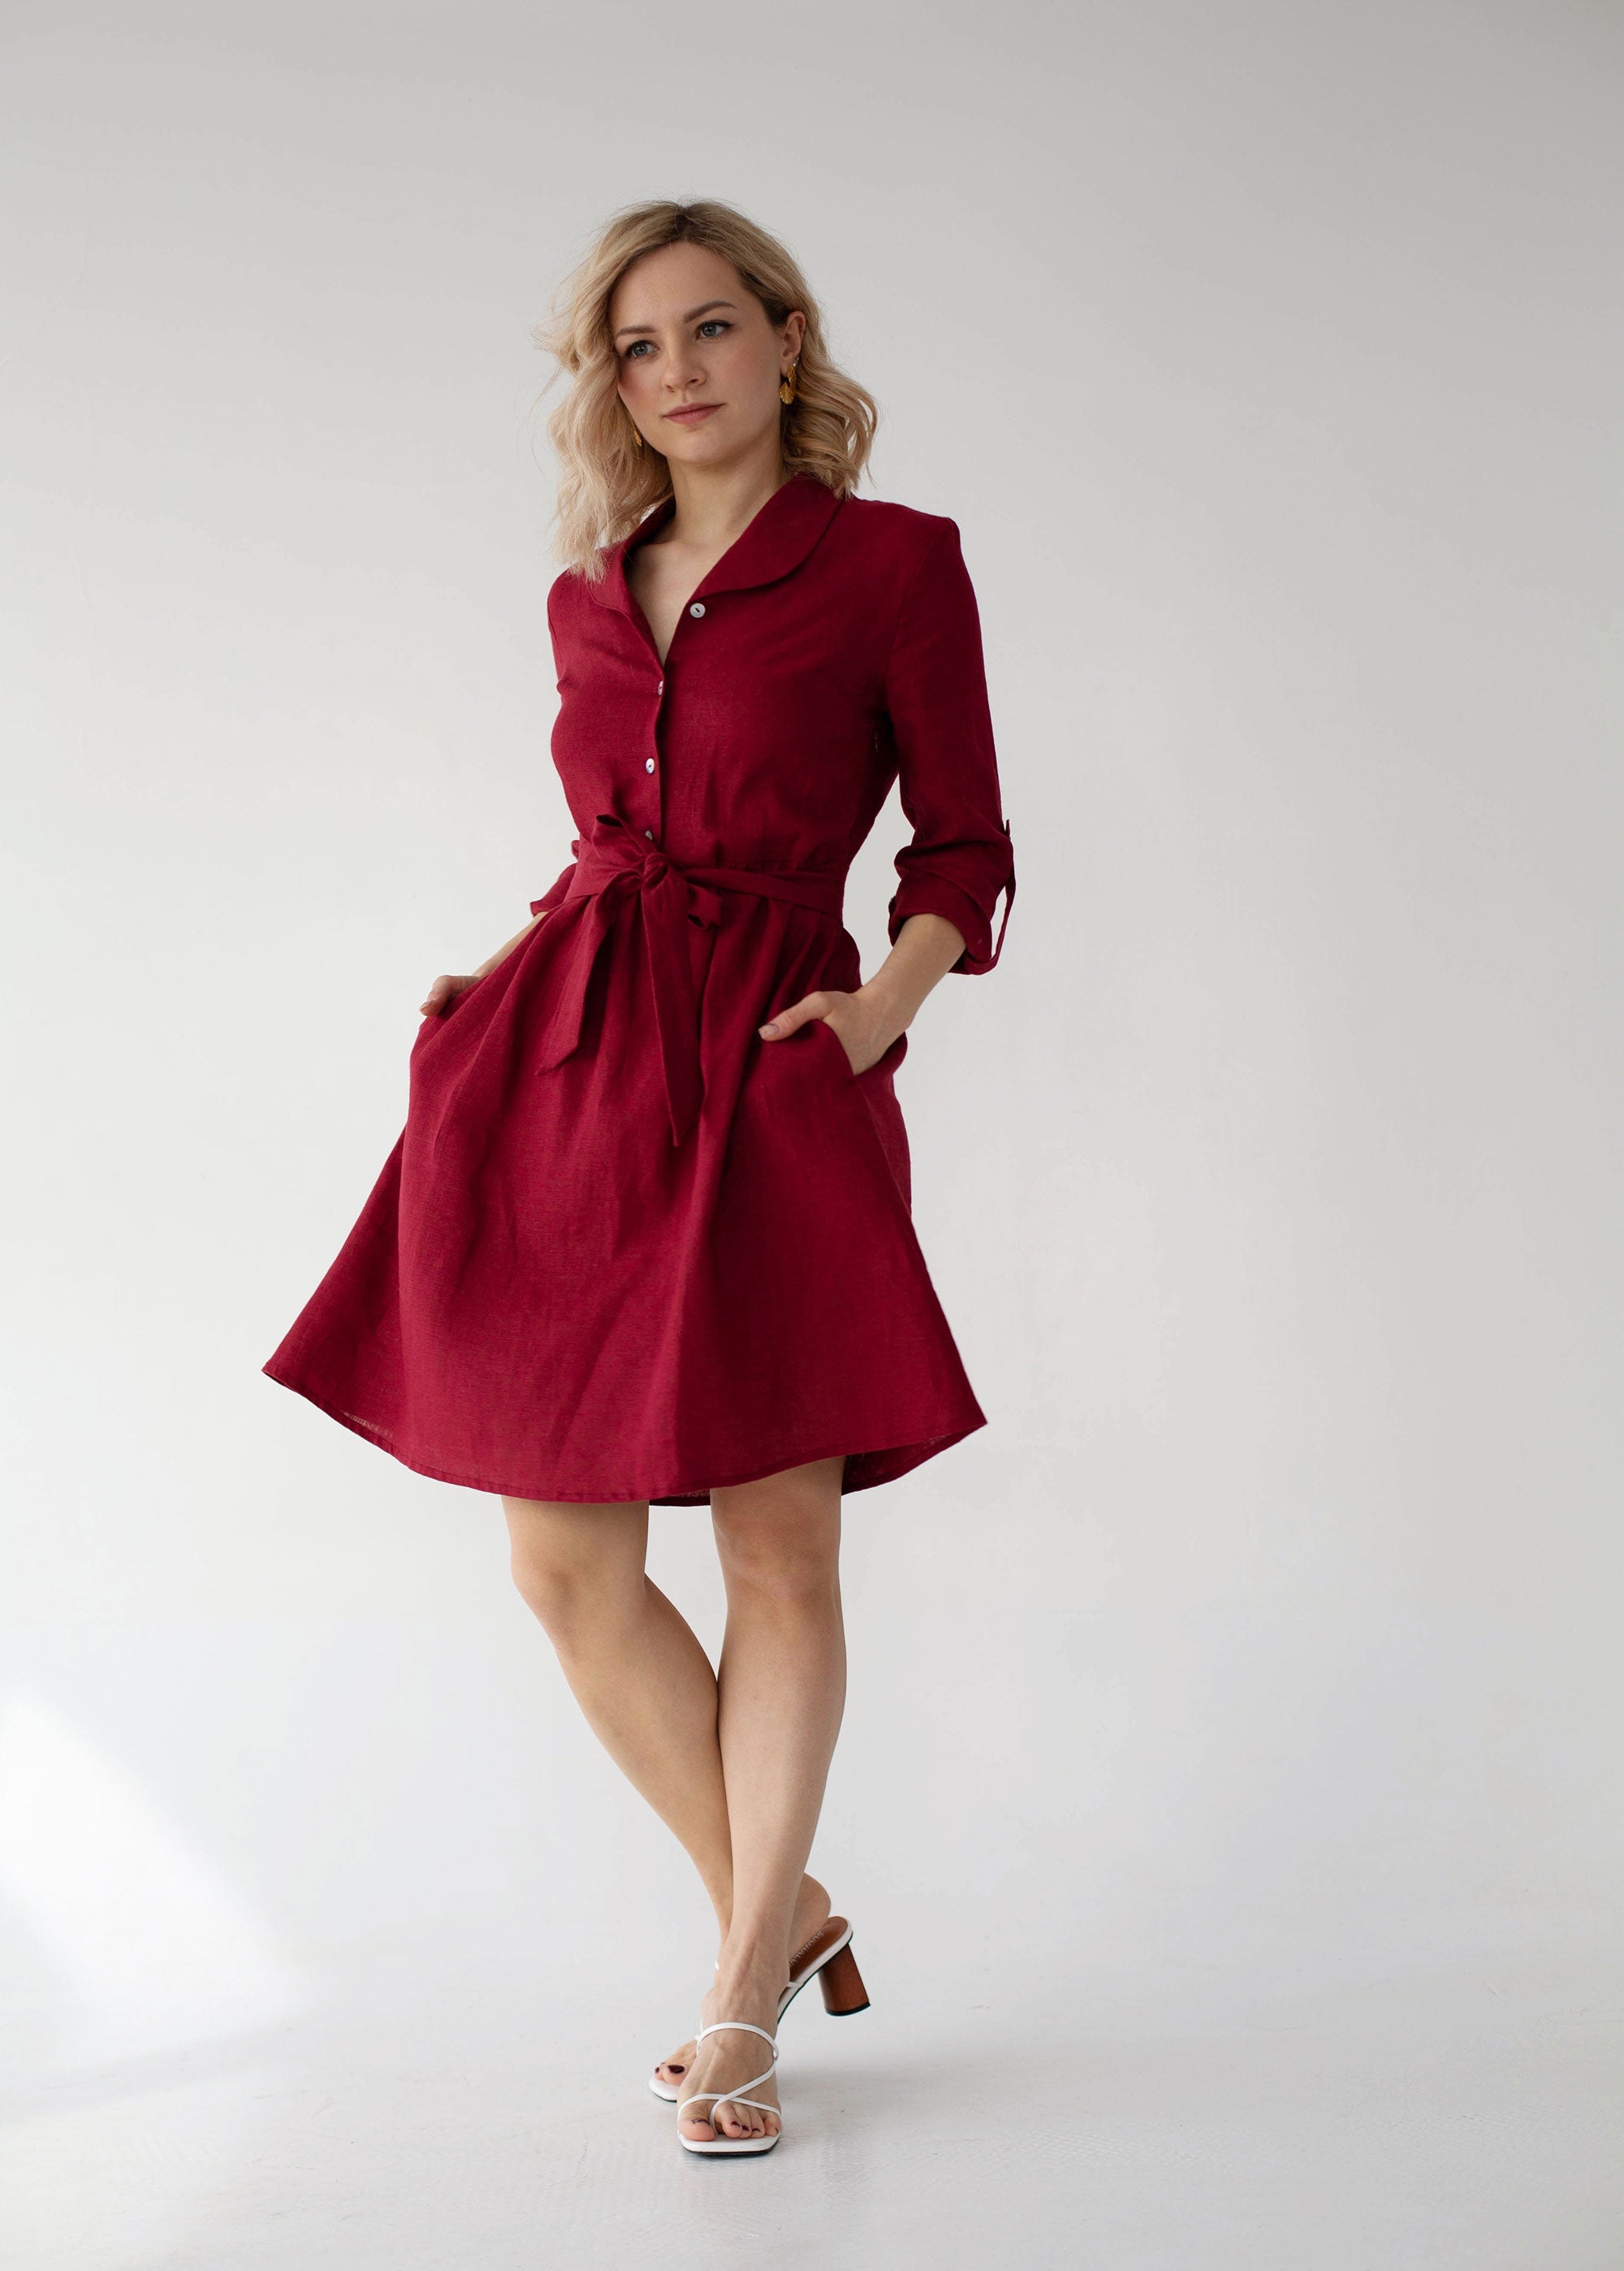 XS size "Lily" Burgundy Button Front Linen Dress